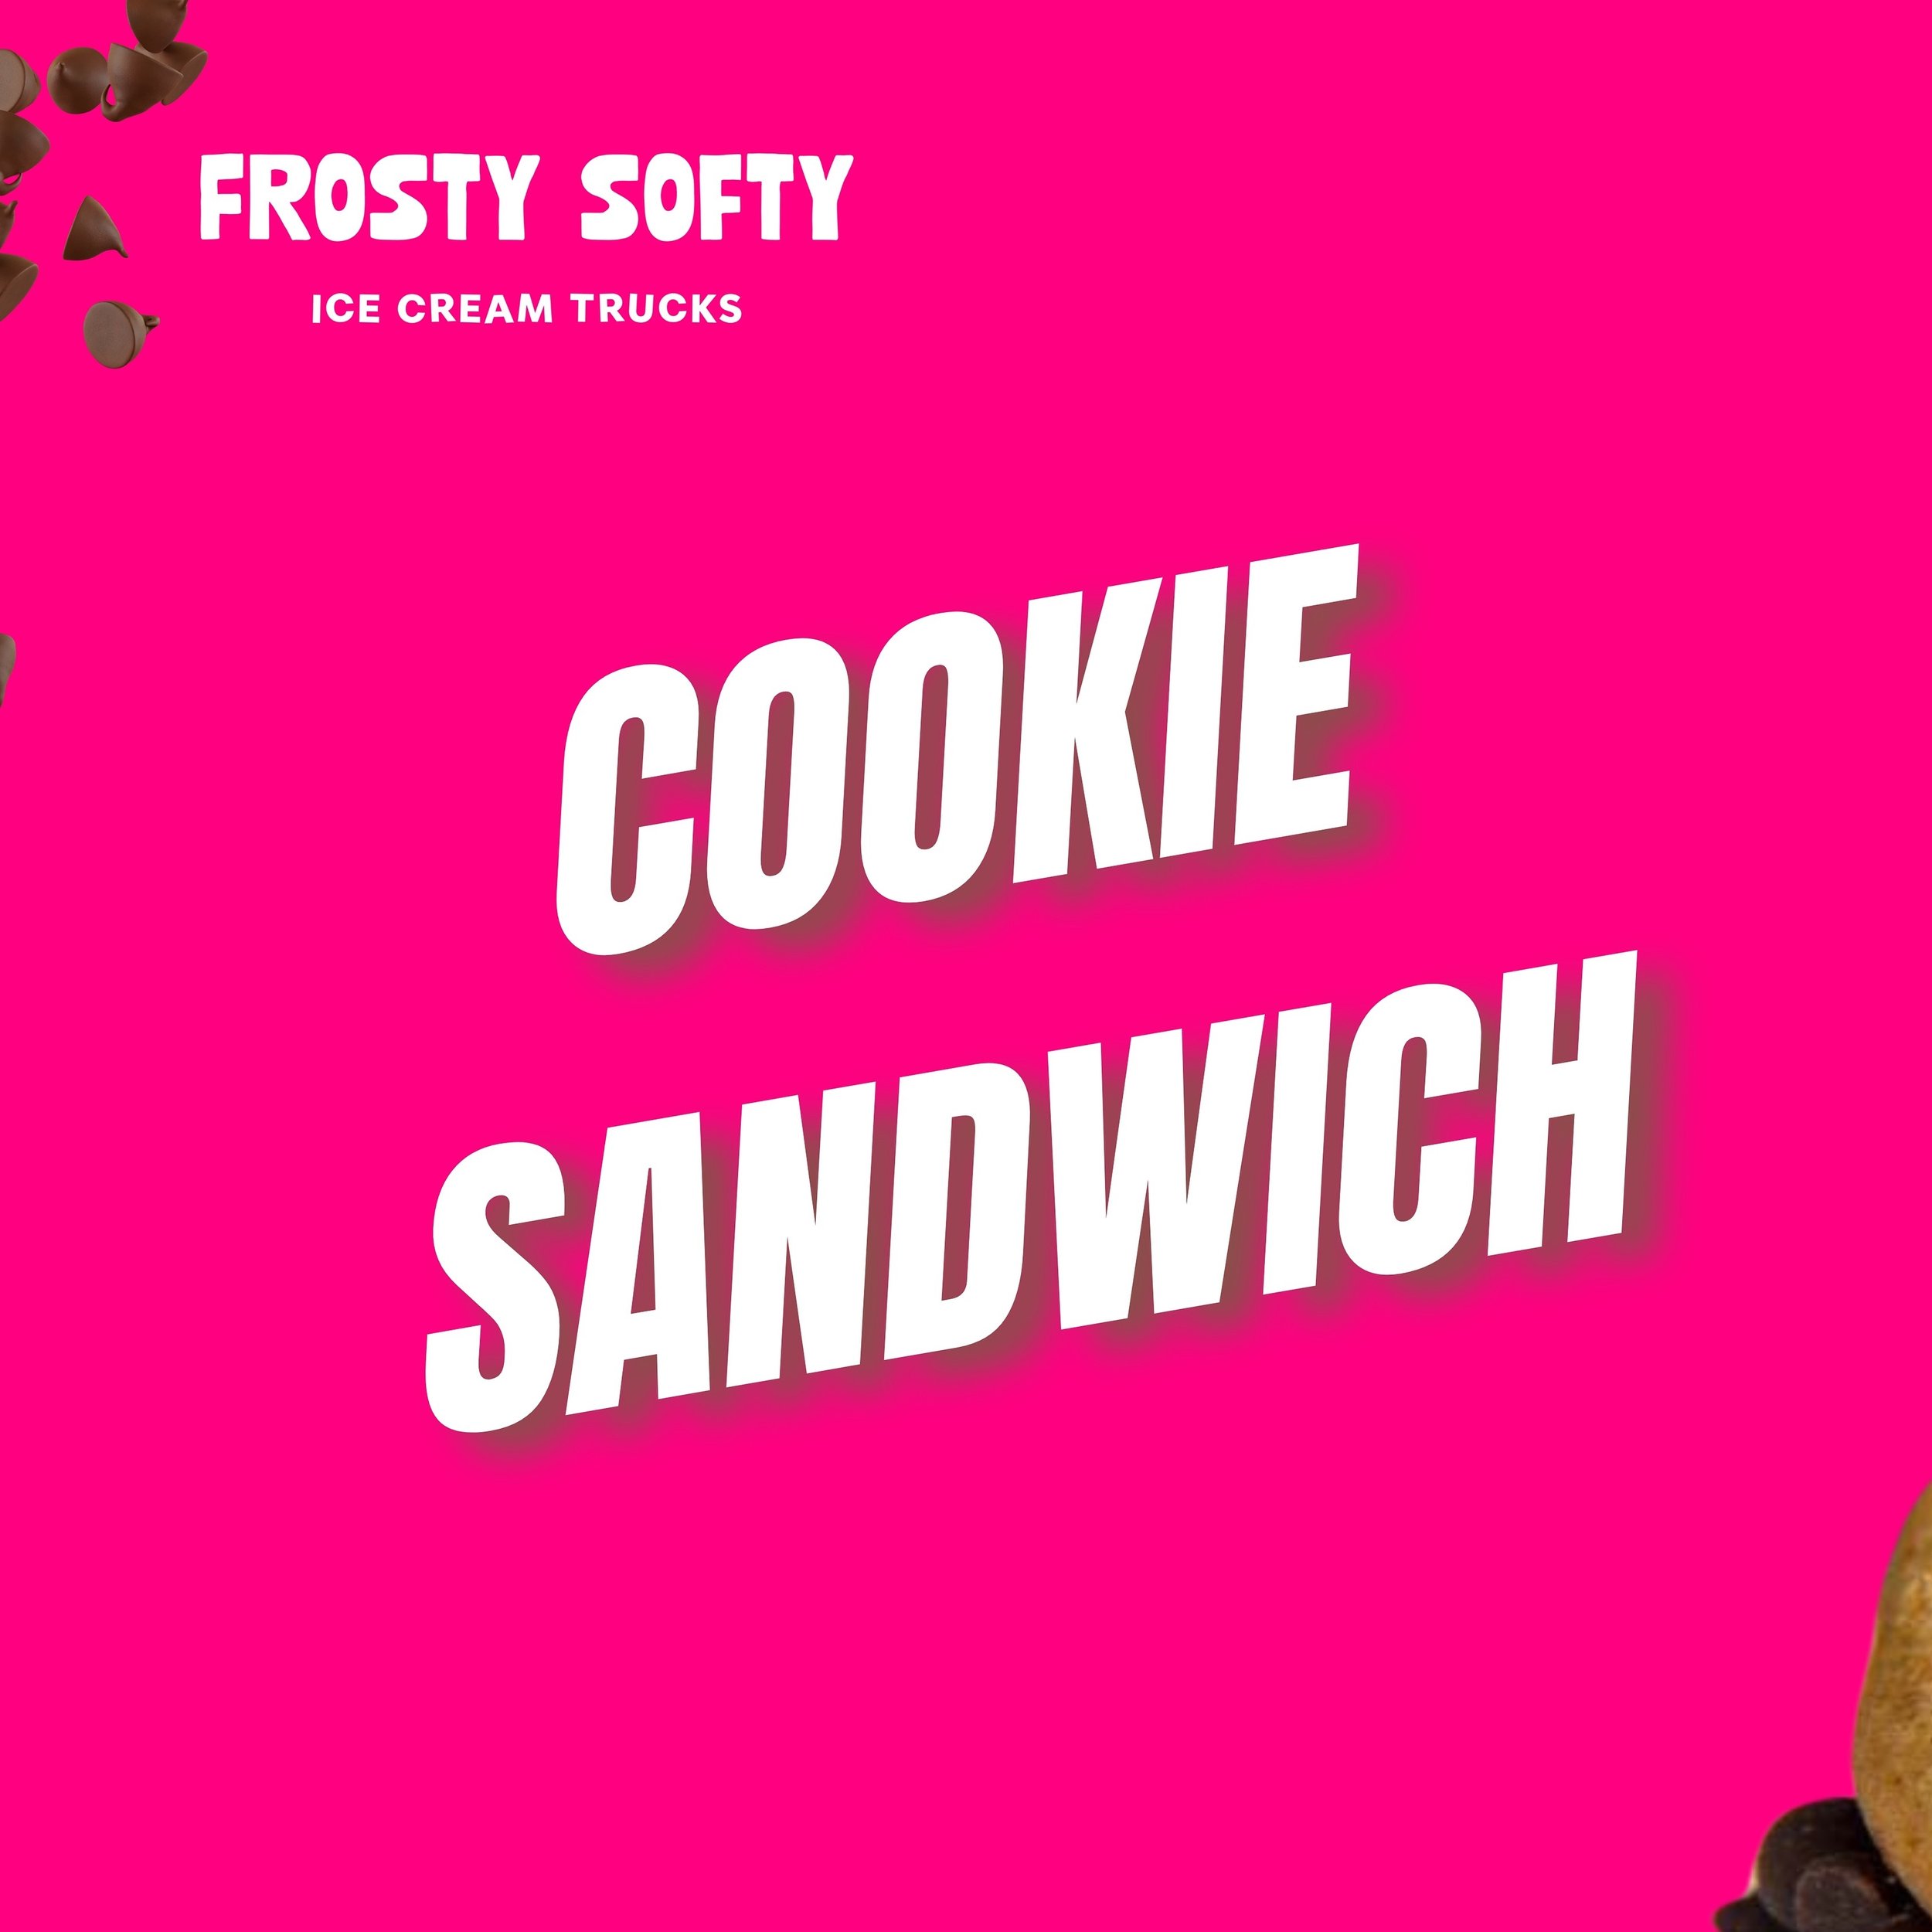 Savor our delicious cookie sandwich! 🍦🍪 Enjoy layers of sweetness between two tasty cookies

#FrostySofty #DMVCatering #DMVEvents #Catering #DMVFoodie #DMVParties #IceCream #DMVWeddings #DMVCorporateEvents #DMVEventPlanning #SweetTreats #DMVPartyPl